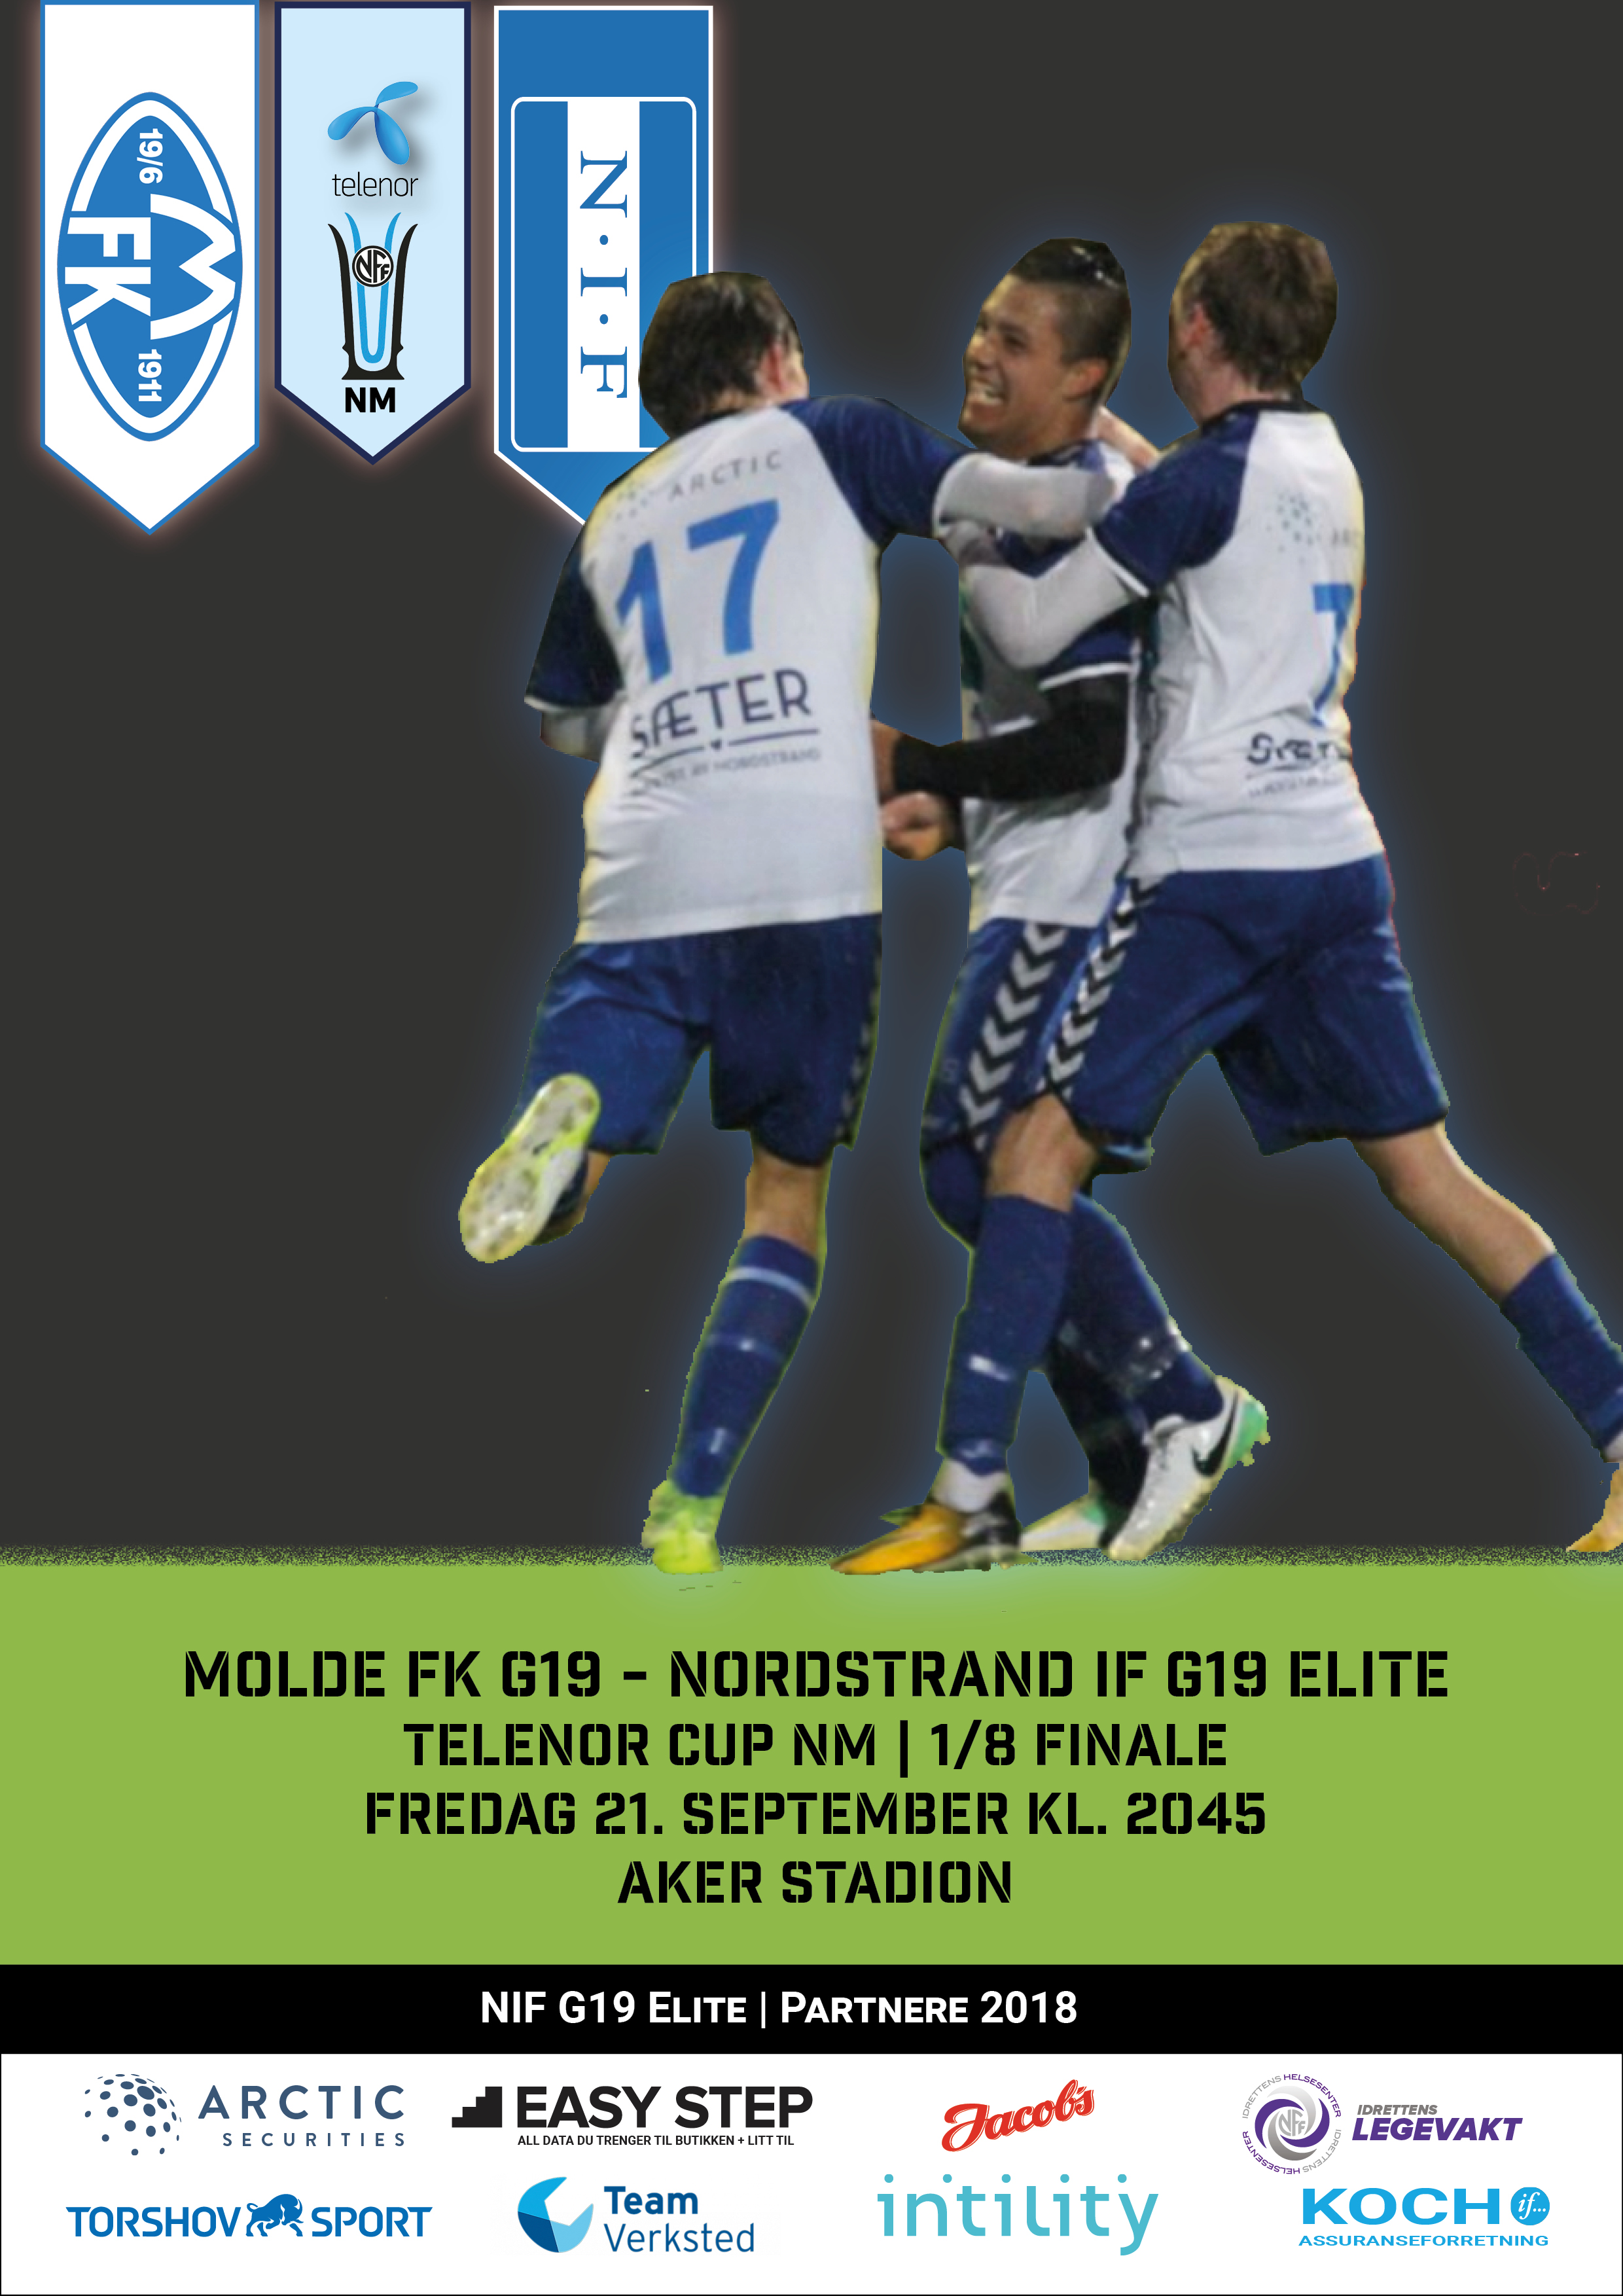 NIF G19 Elite møter fjorårets norgesmestere Molde FK på Aker Stadion